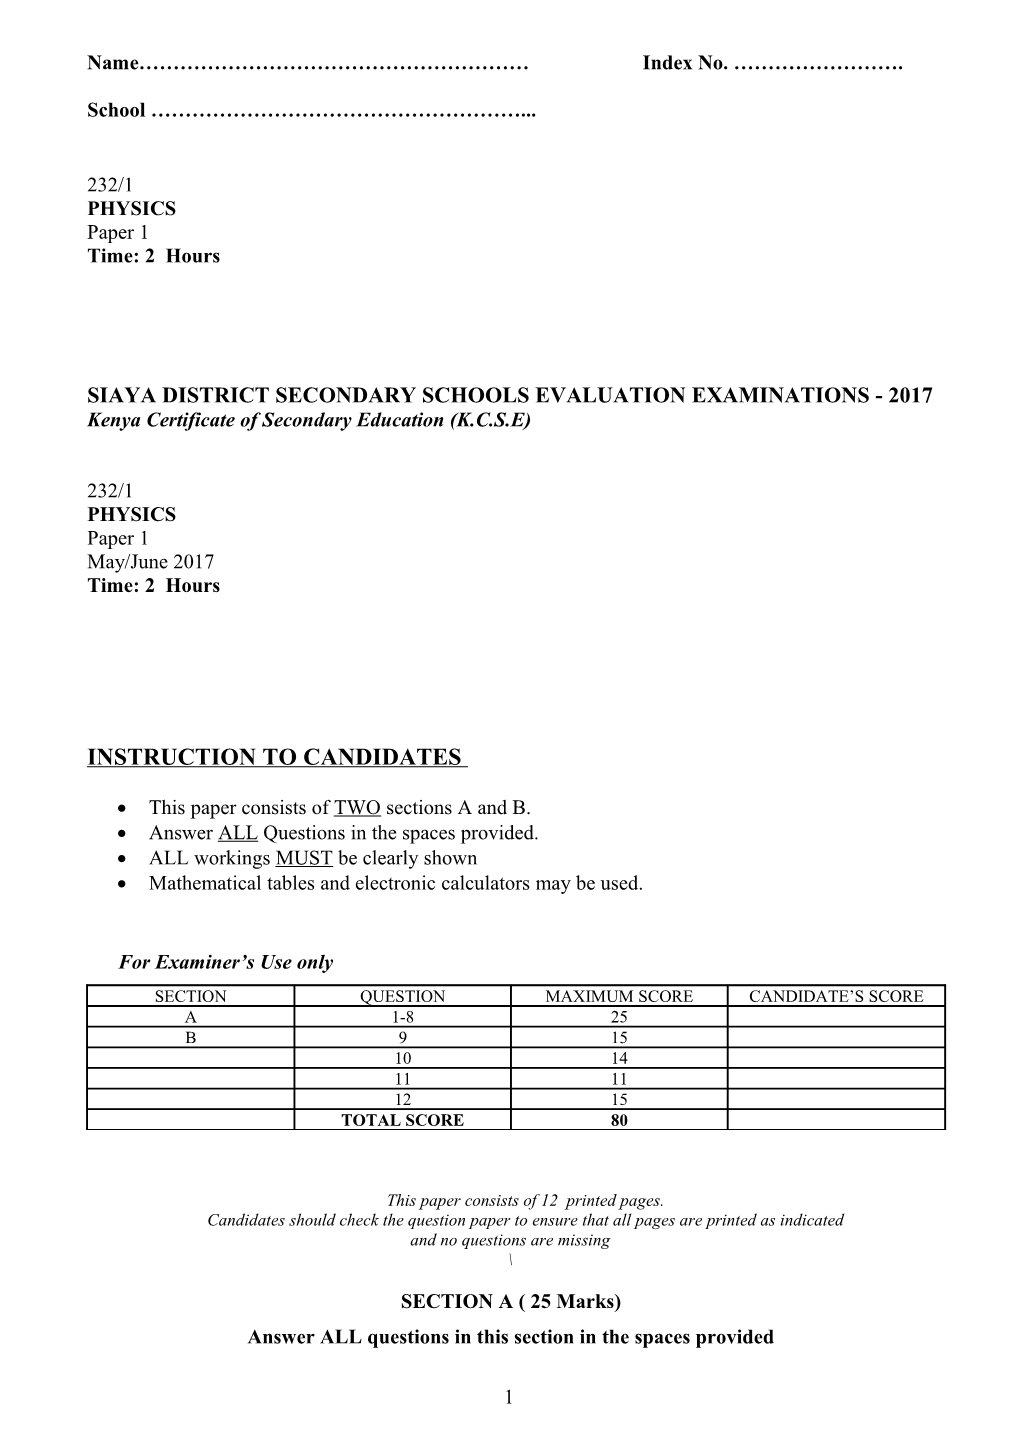 Siaya District Secondary Schools Evaluation Examinations - 2017